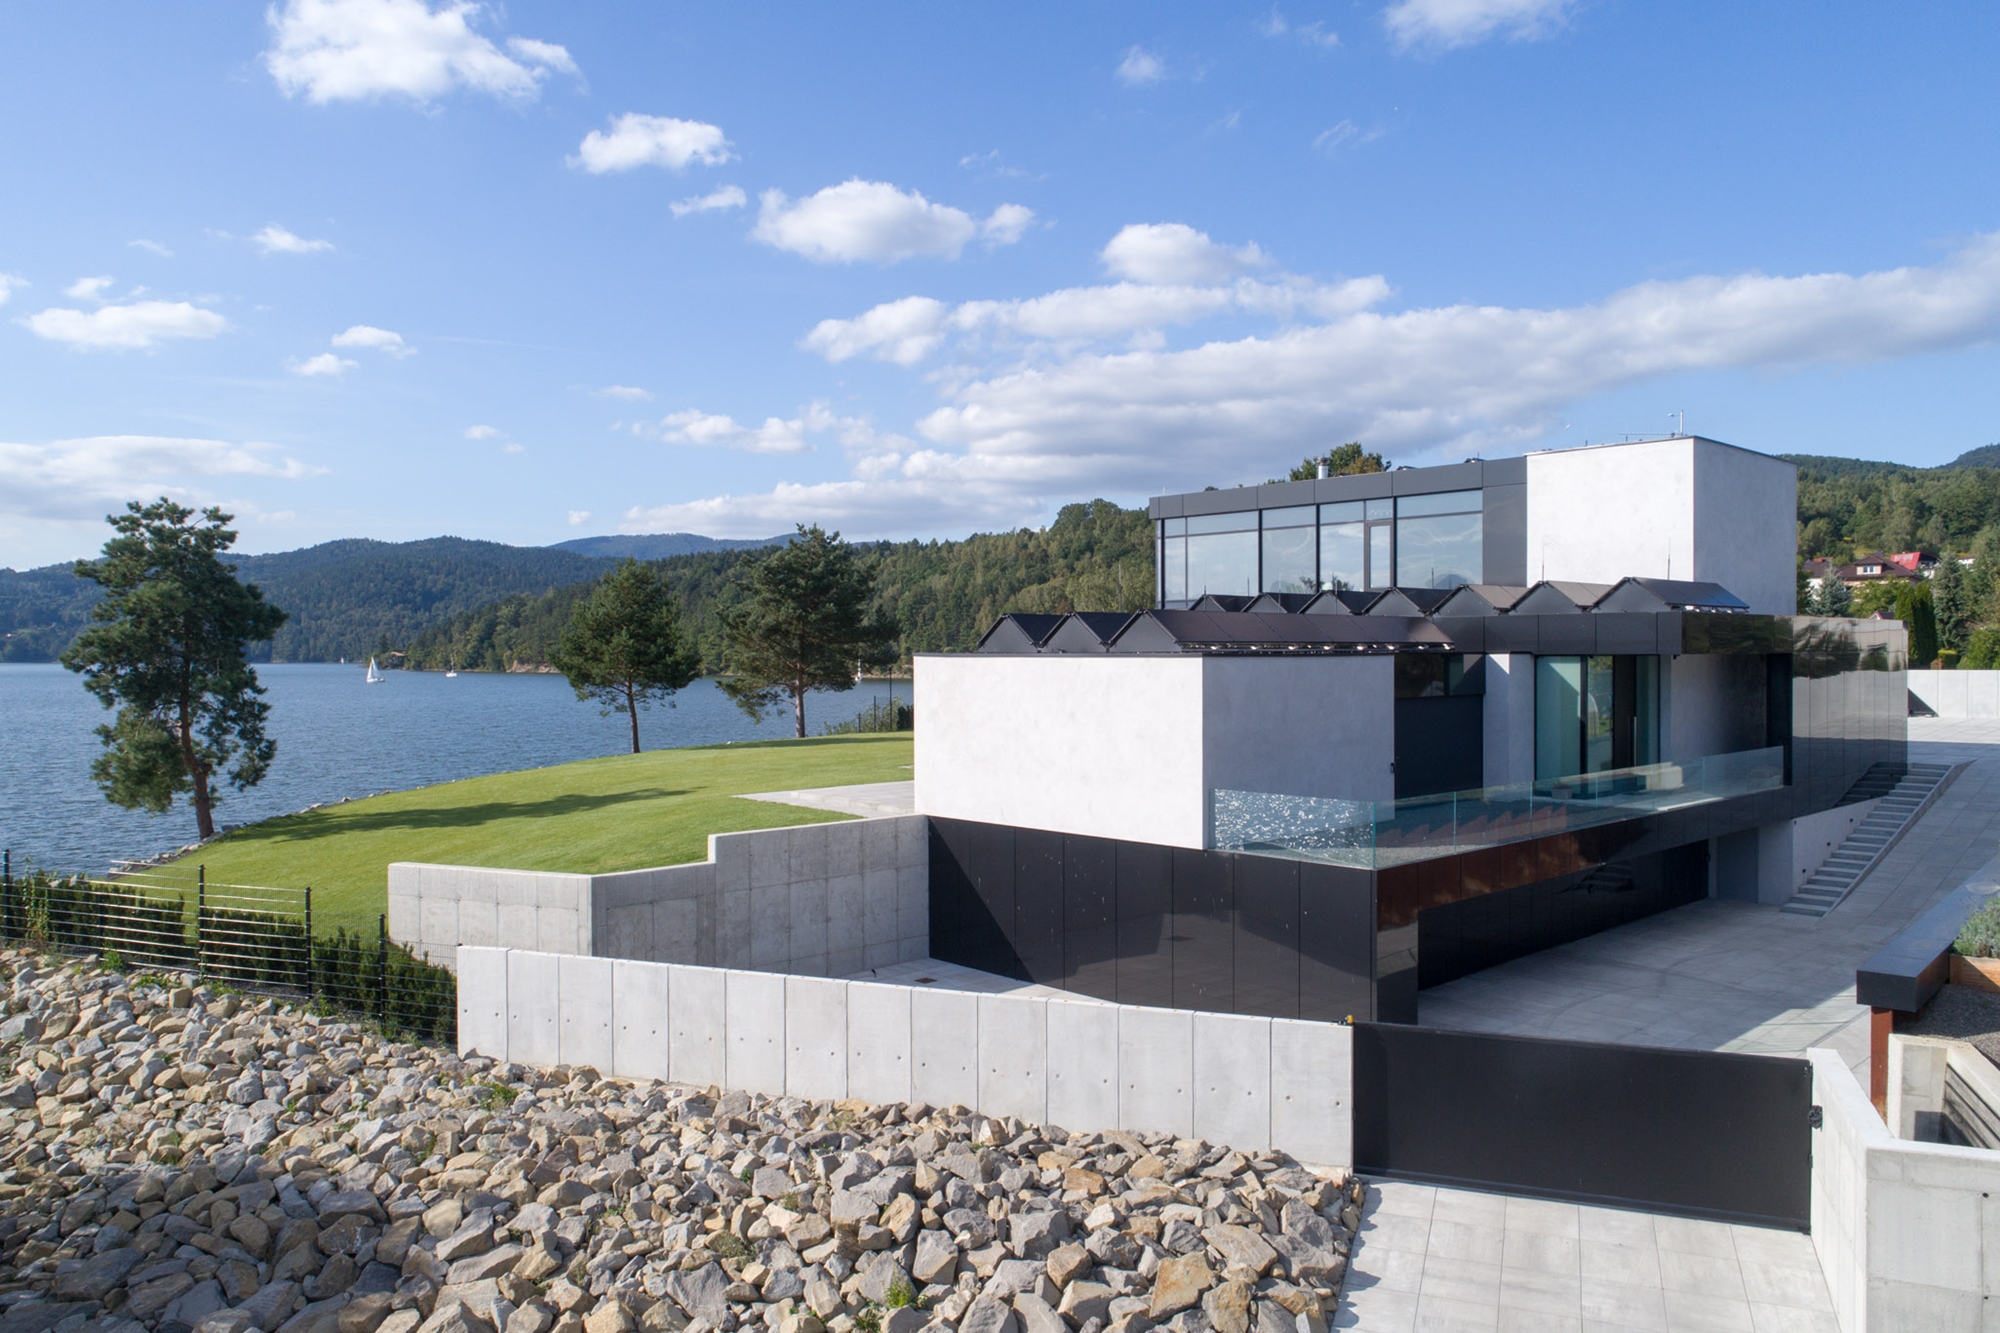 RE: Lakeside house, czyli dom nad jeziorem od REFORM Architekt